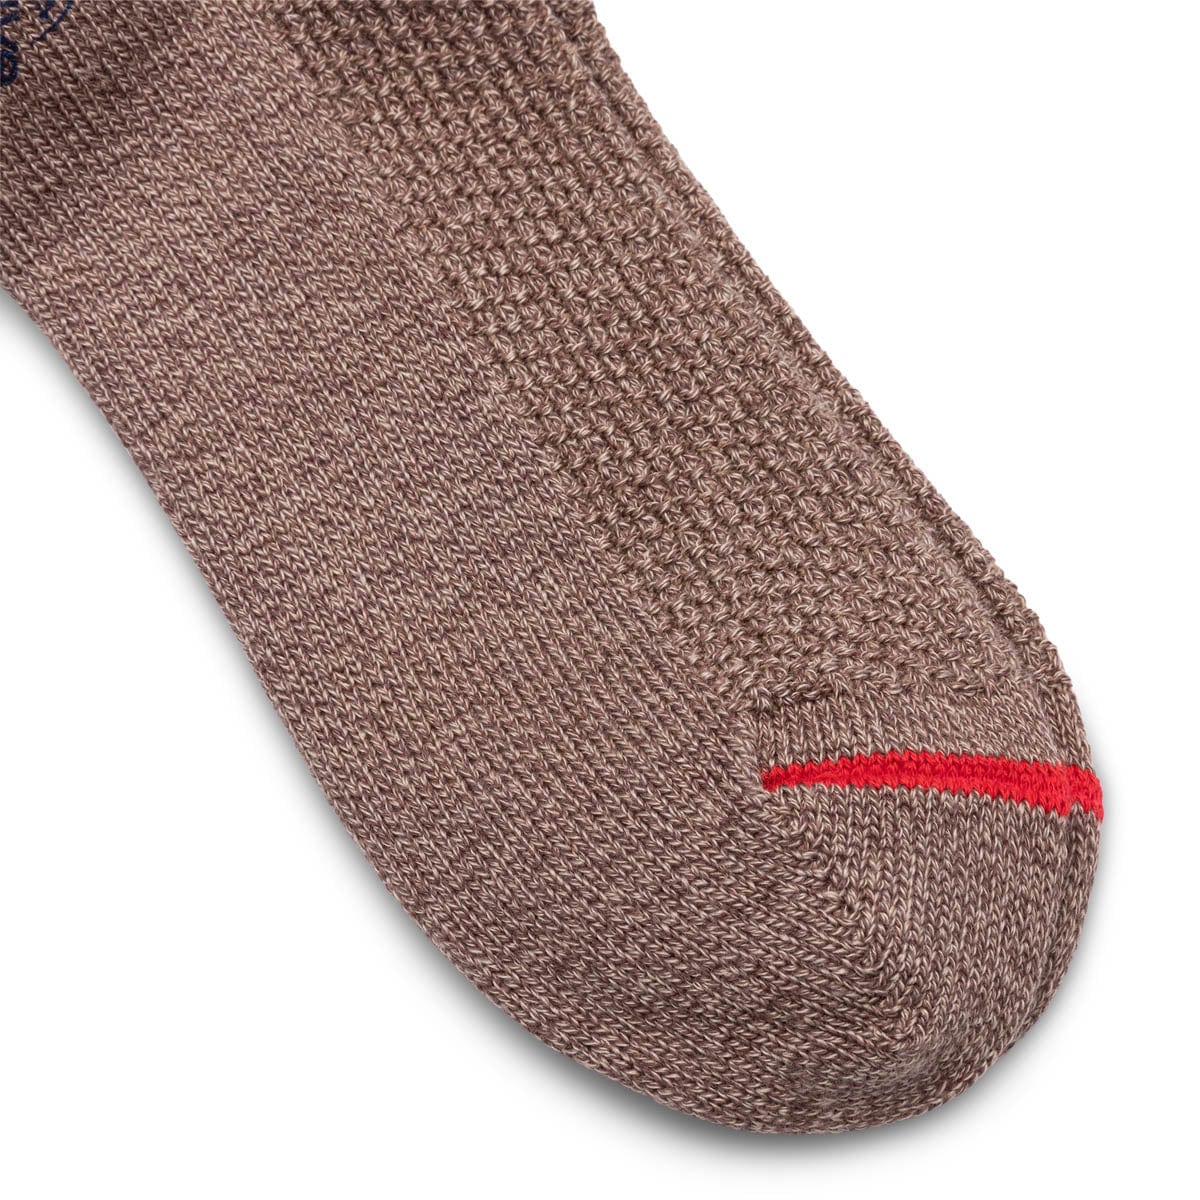 Nonnative Socks BROWN / O/S DWELLER SOCKS